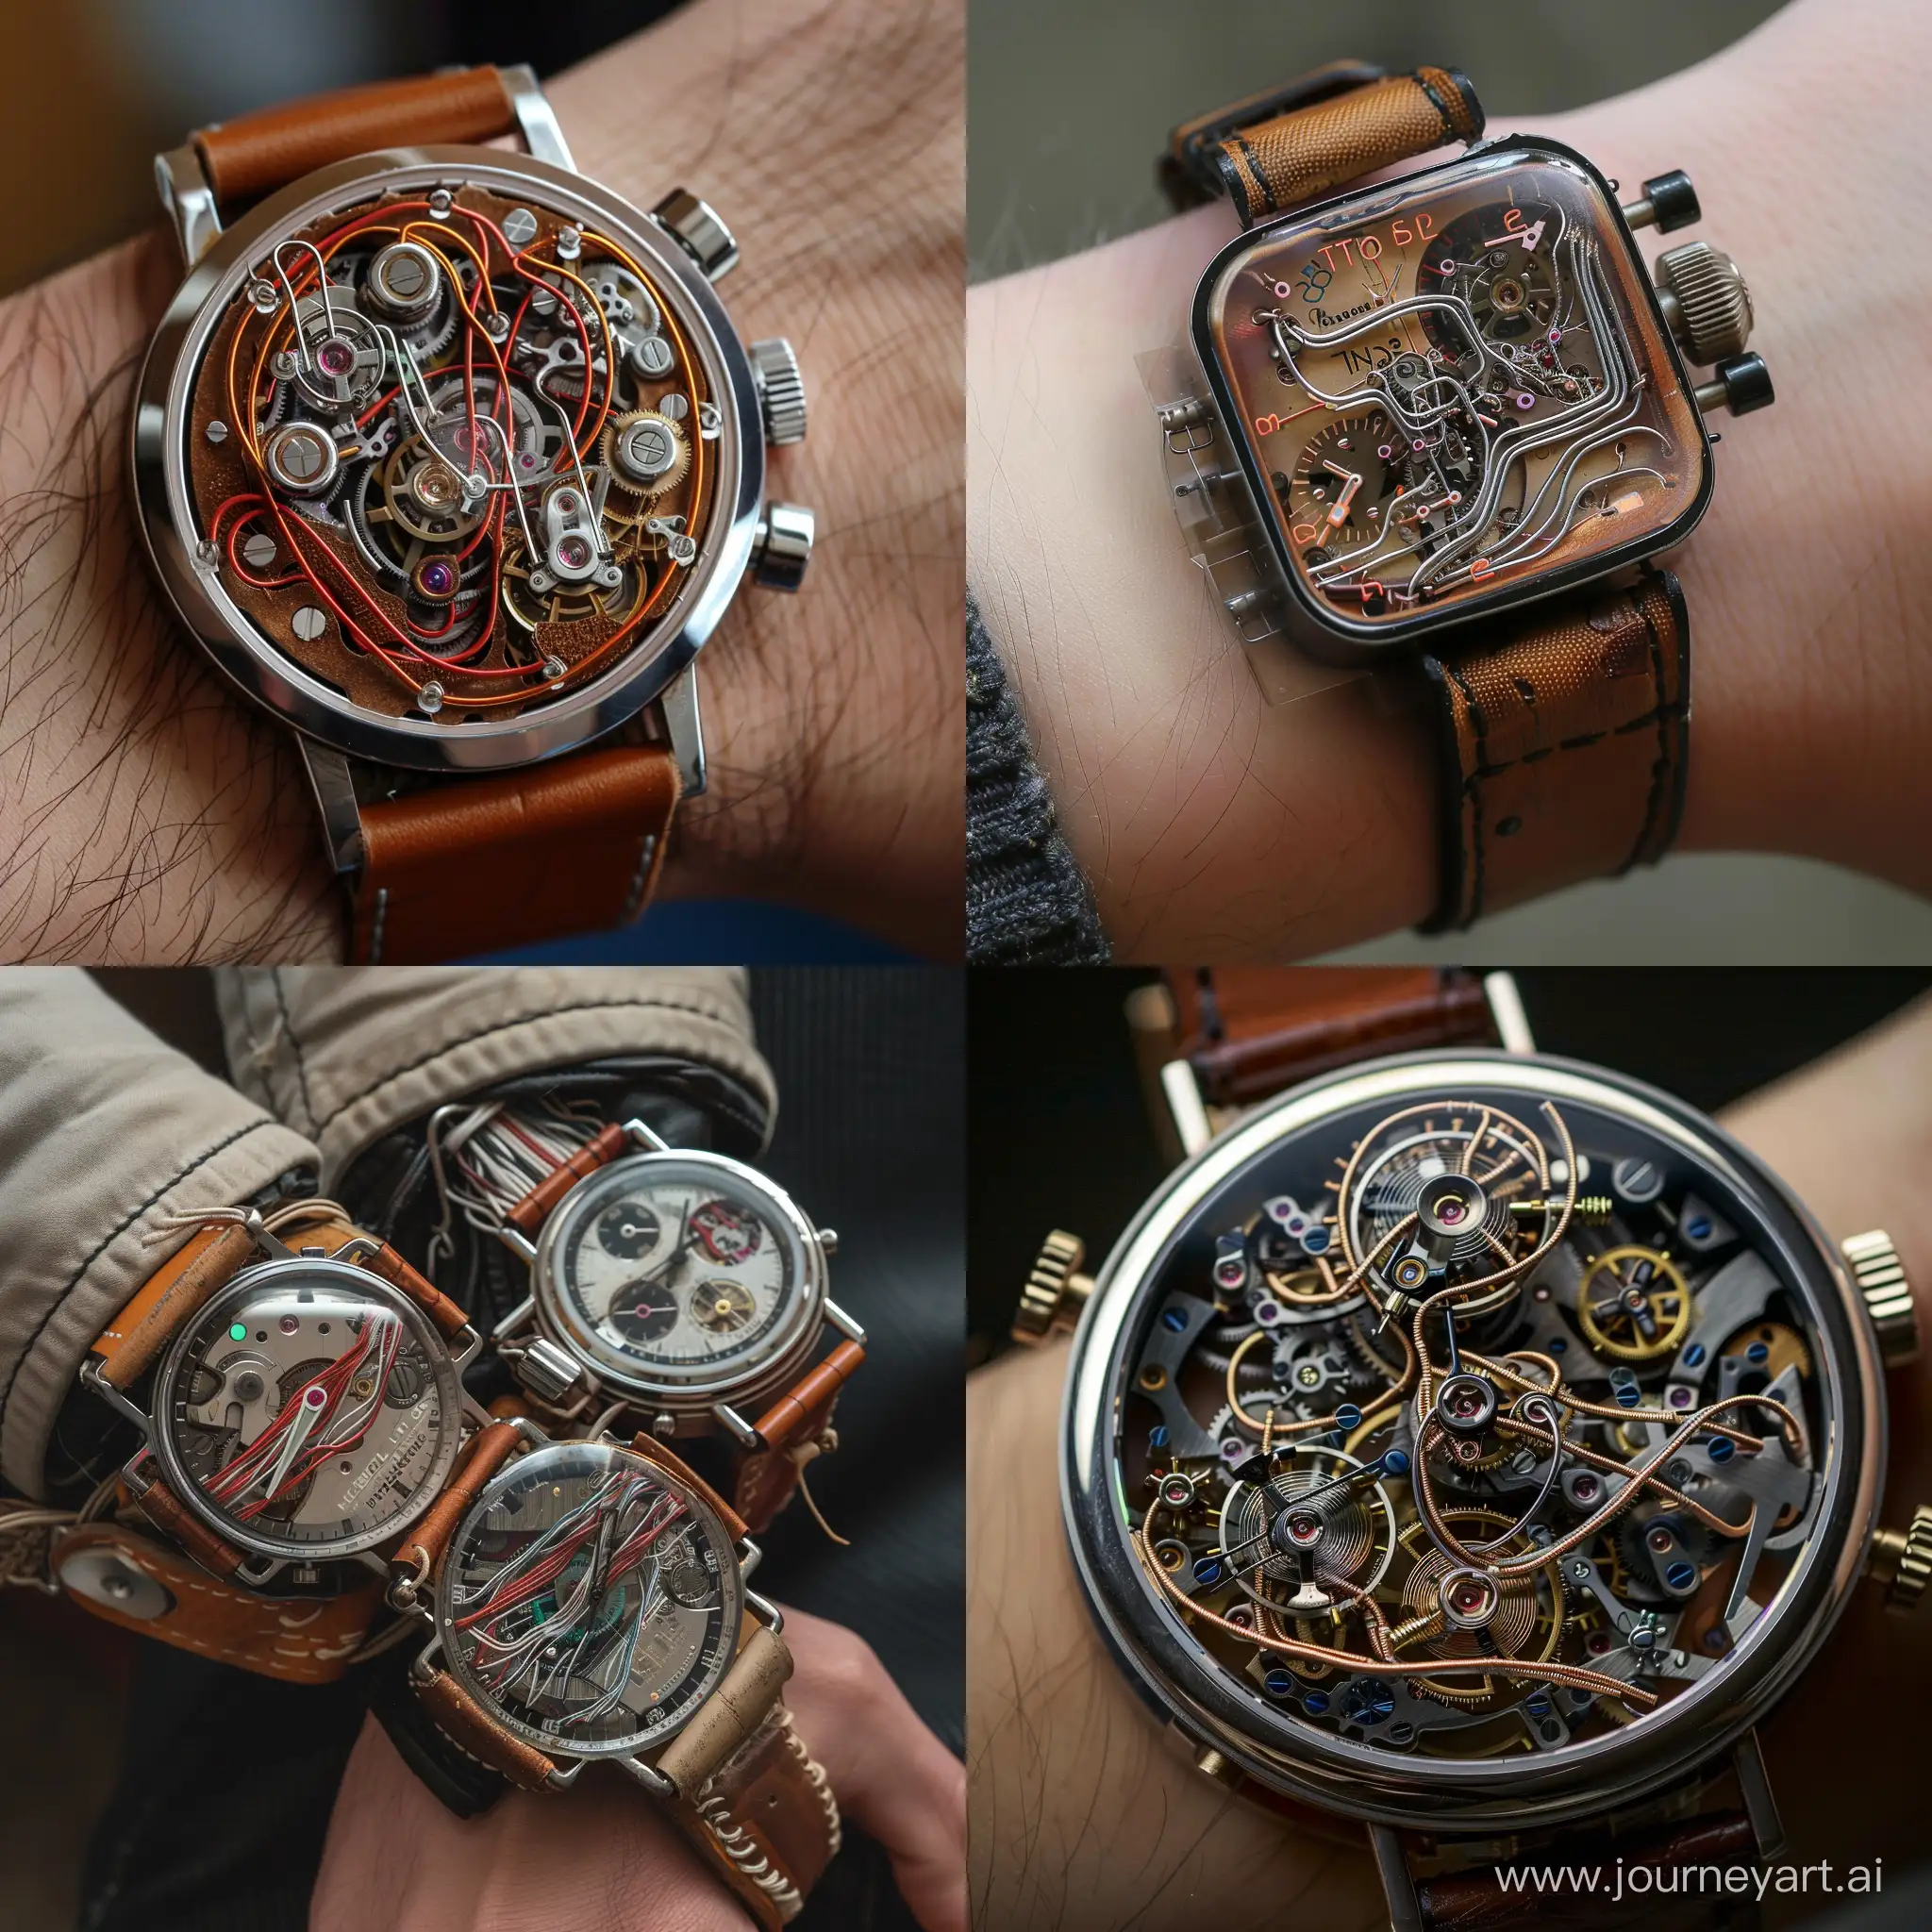 Futuristic-Wristwatches-with-Intricate-Wiring-HighTech-Fashion-Statement